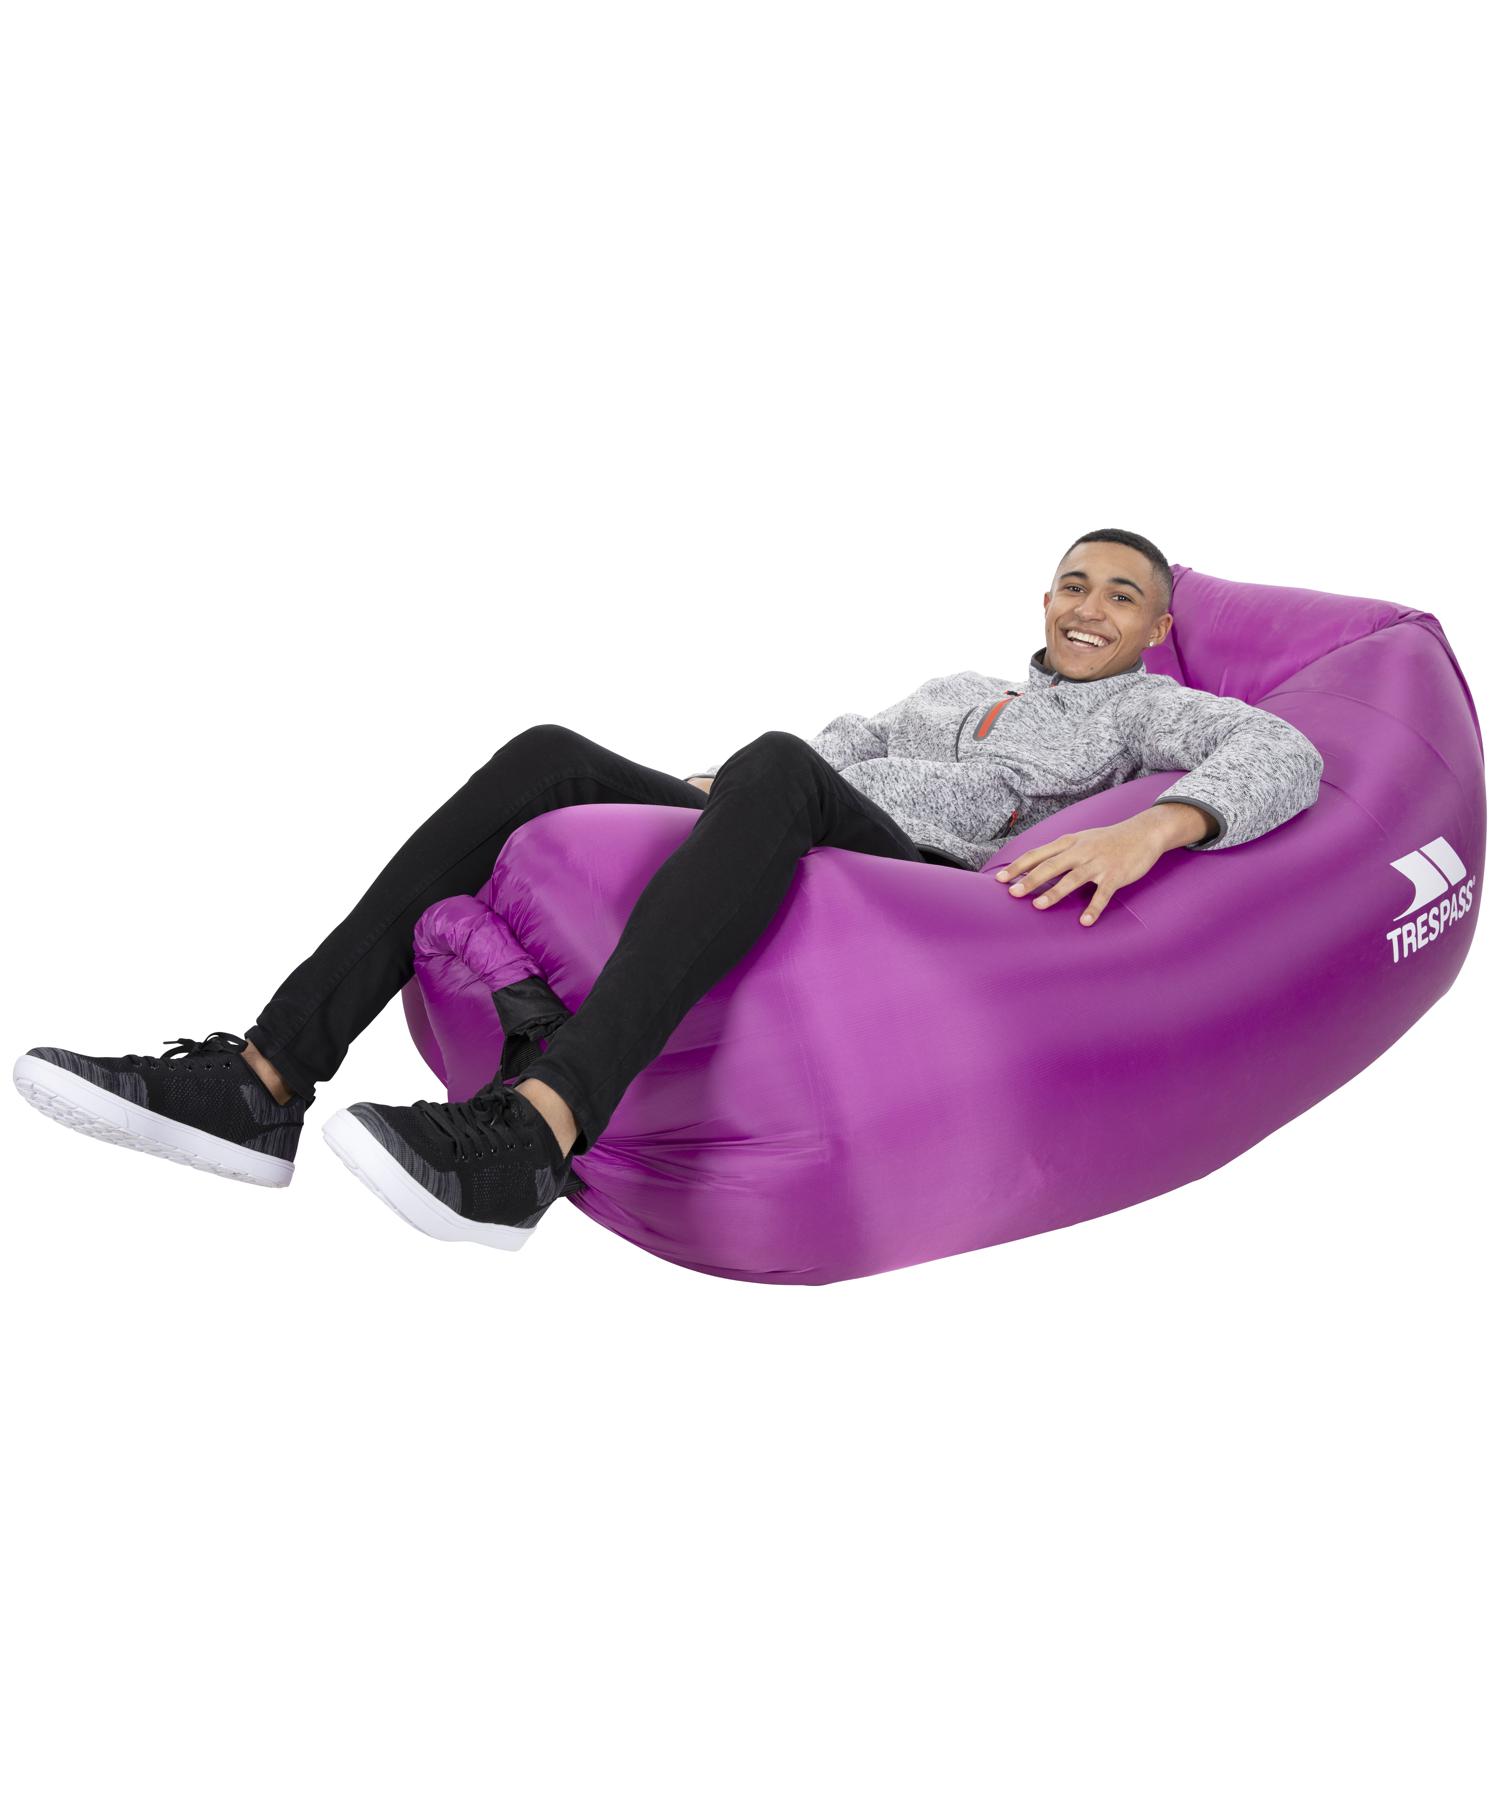 Trespass Inflatable Sofa